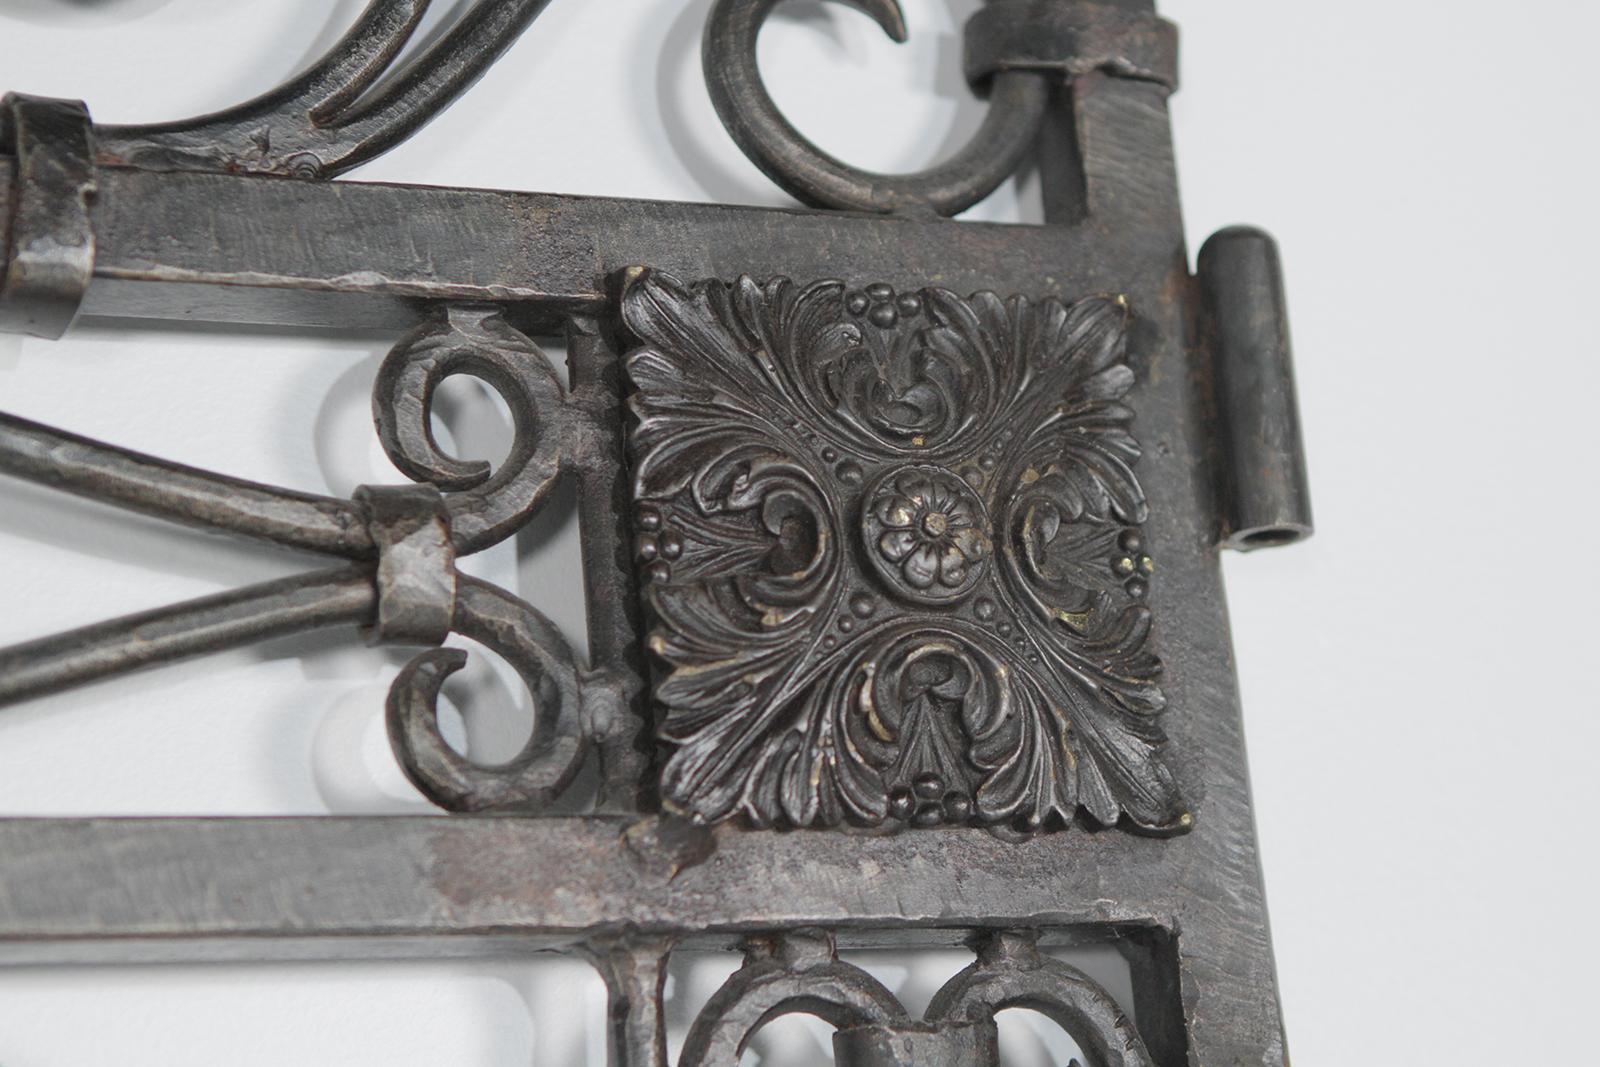 Super Impressive Pair of European Hand Wrought Iron Ornate Architectural Gates 3